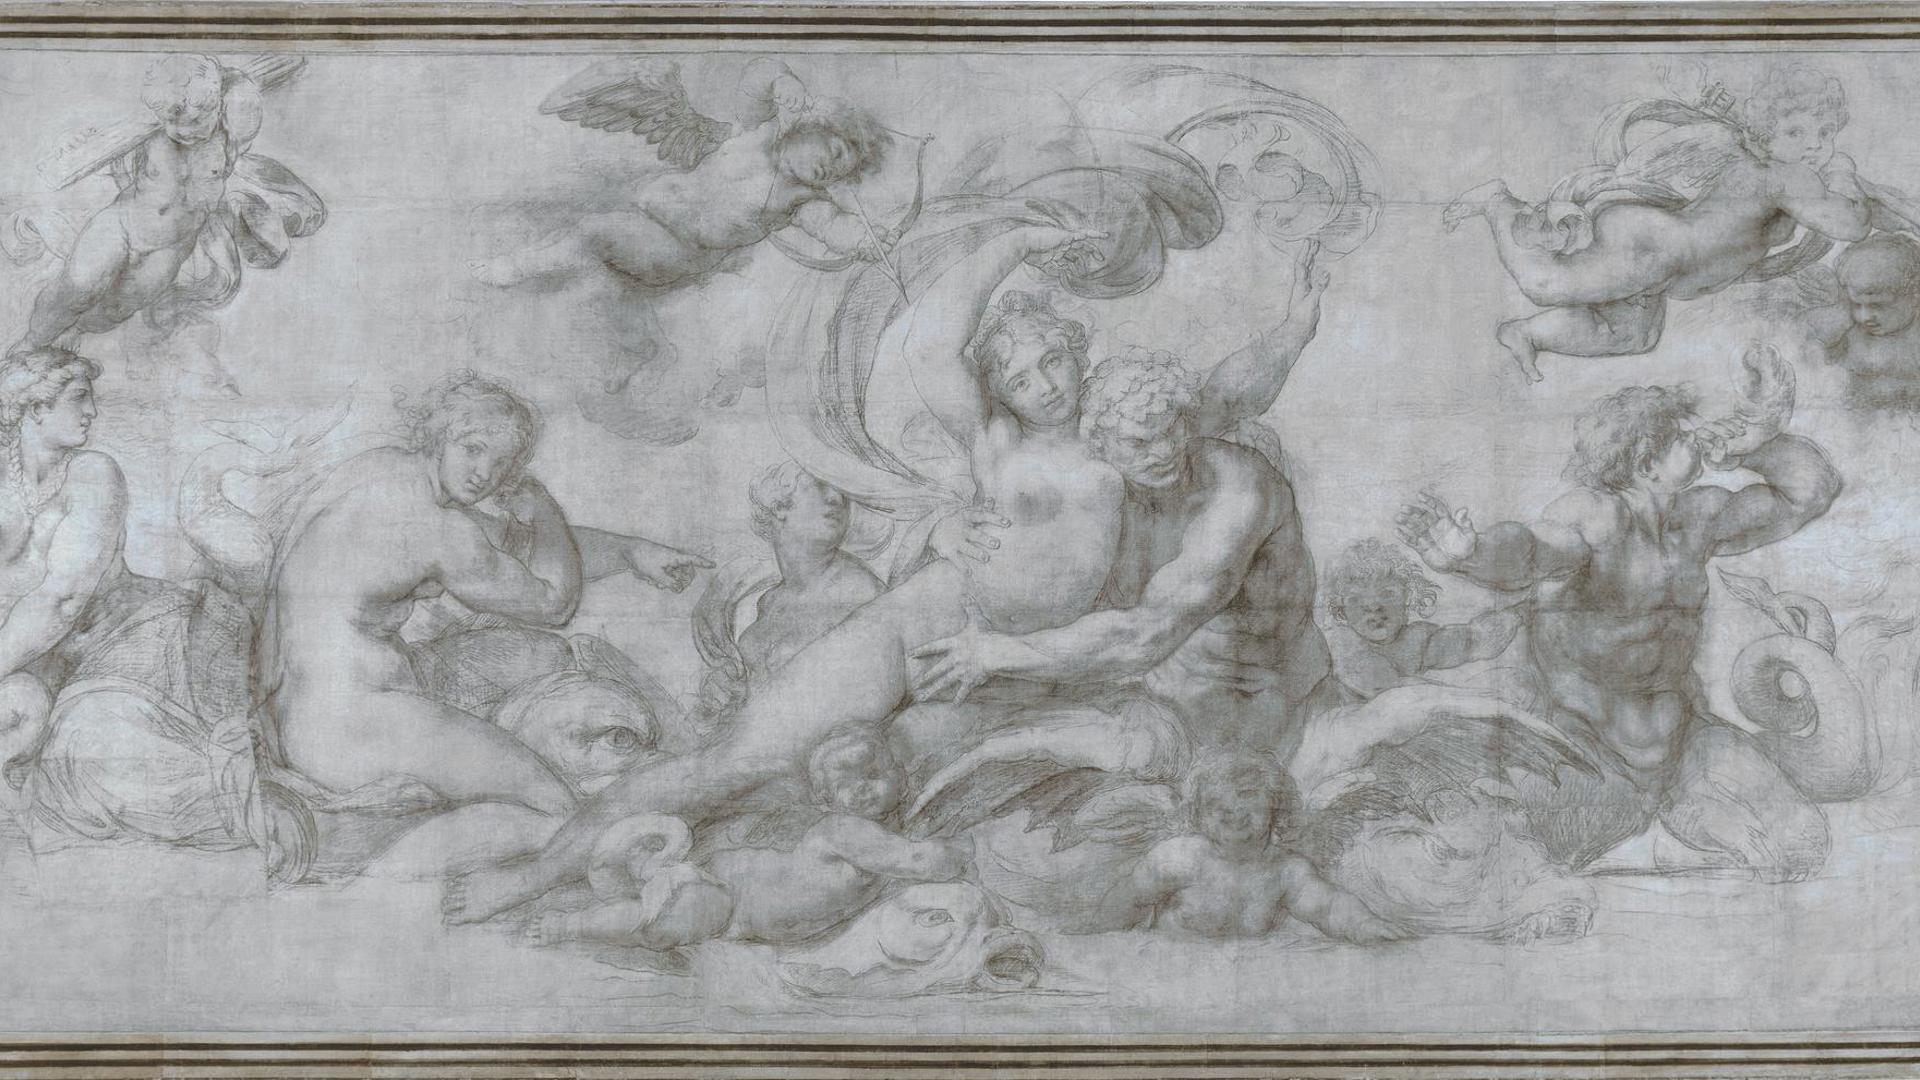 A Woman borne off by a Sea God (?) by Agostino Carracci